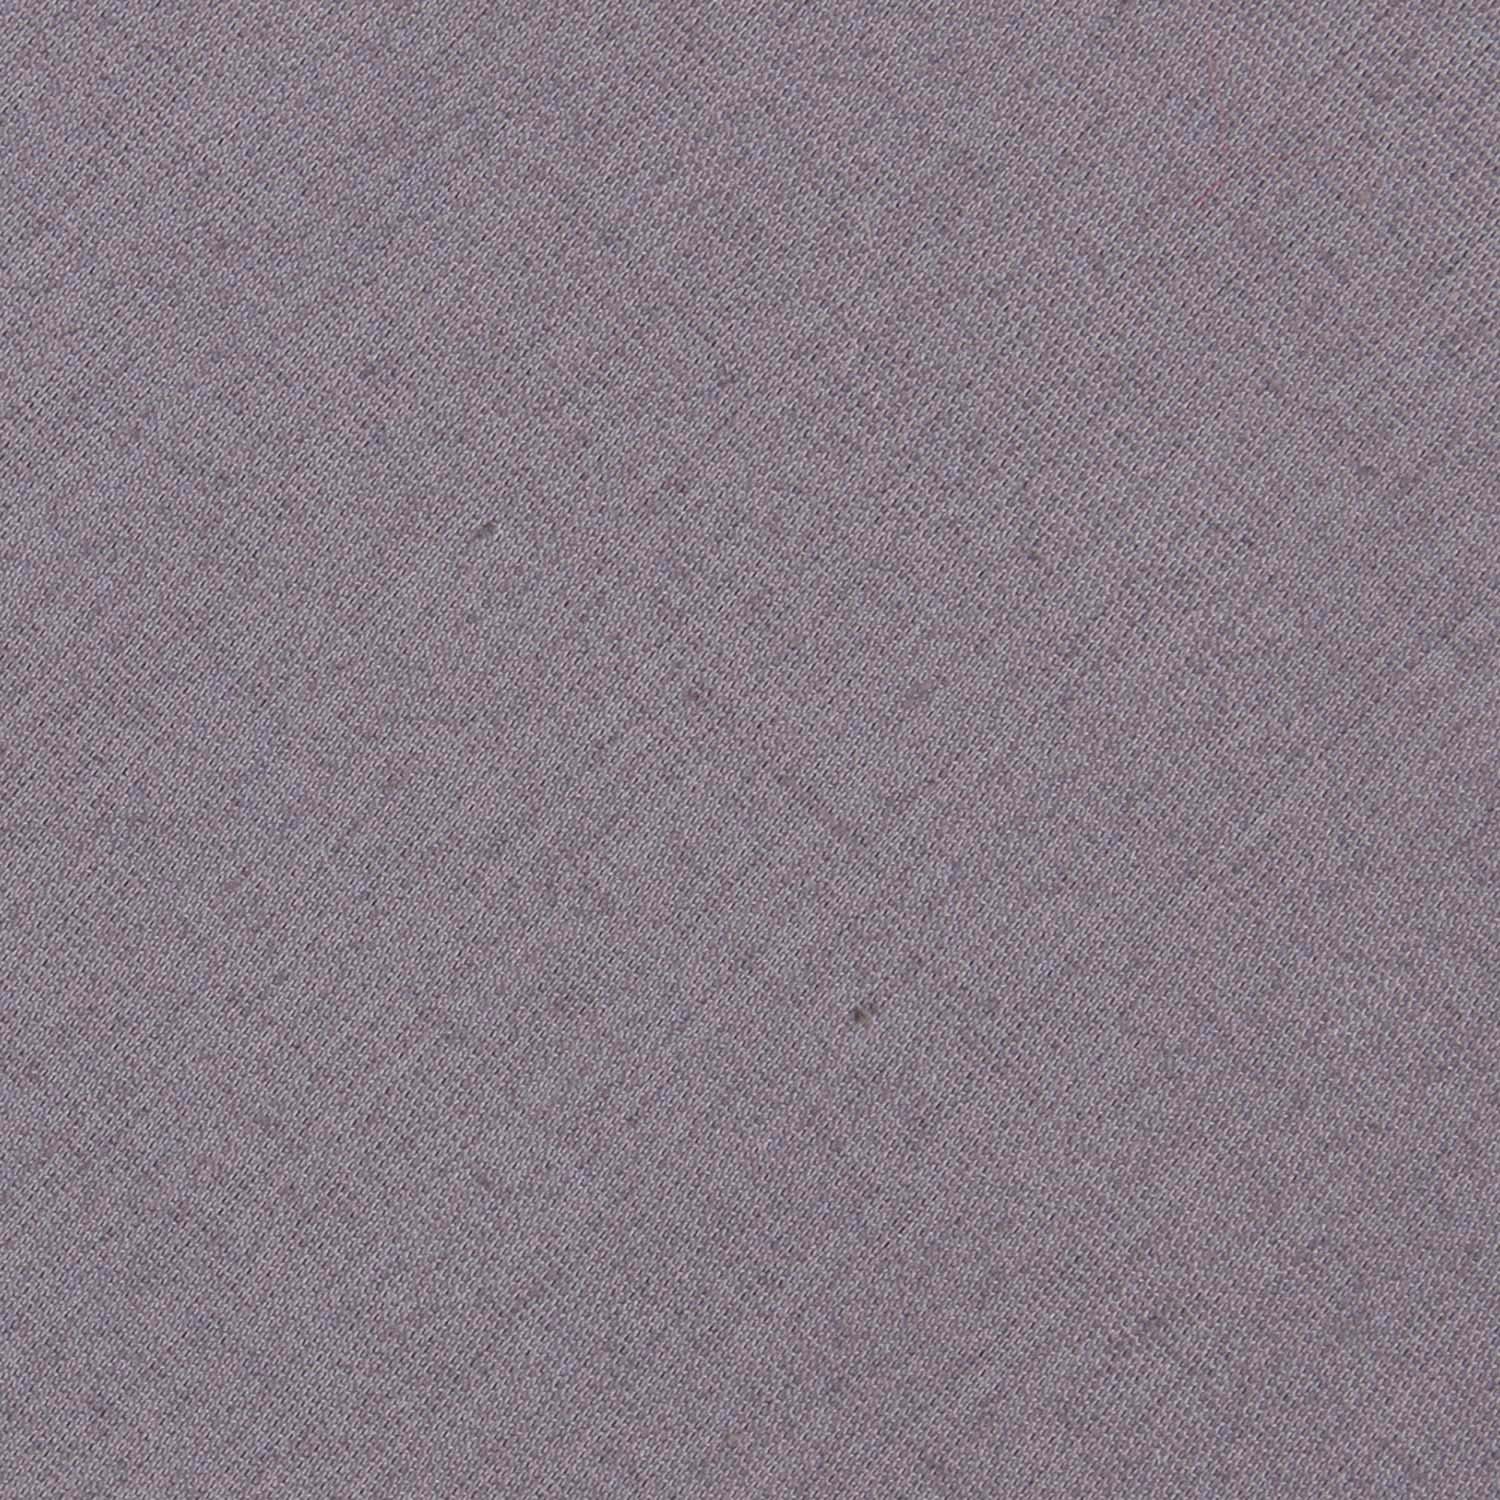 Charcoal Grey Cotton Fabric Skinny Tie C159